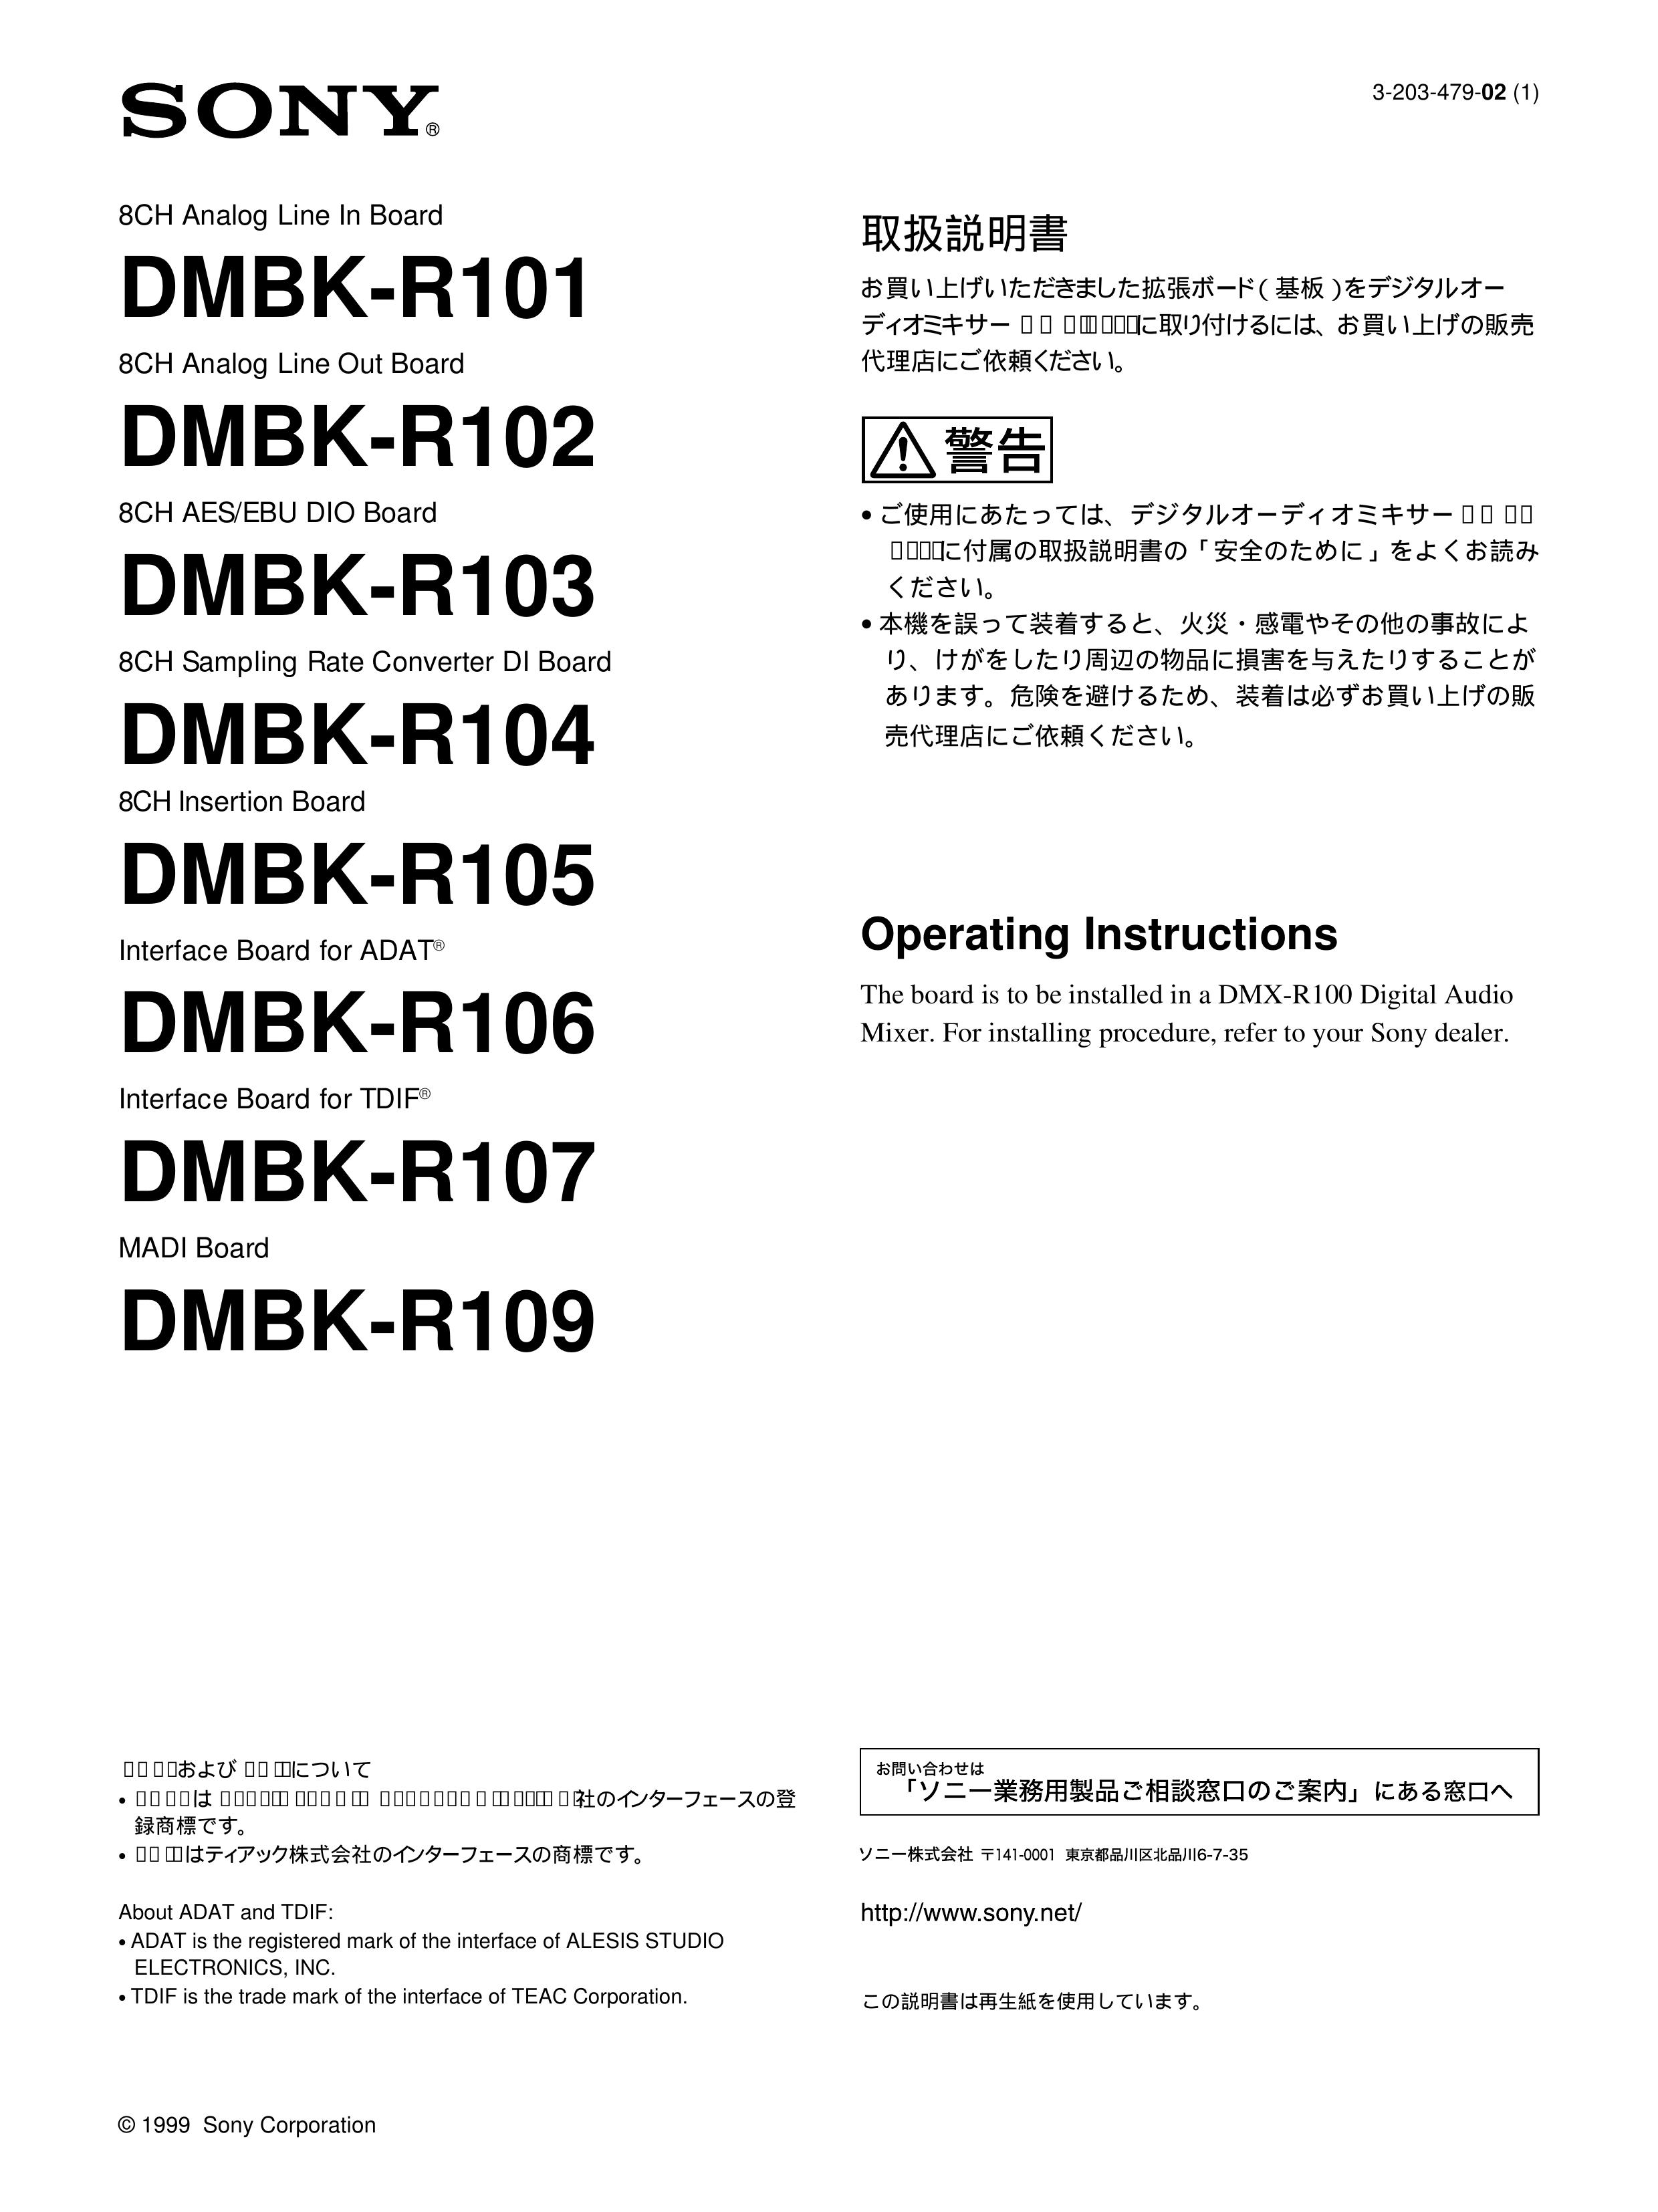 Sony DMBK-R101 Music Mixer User Manual